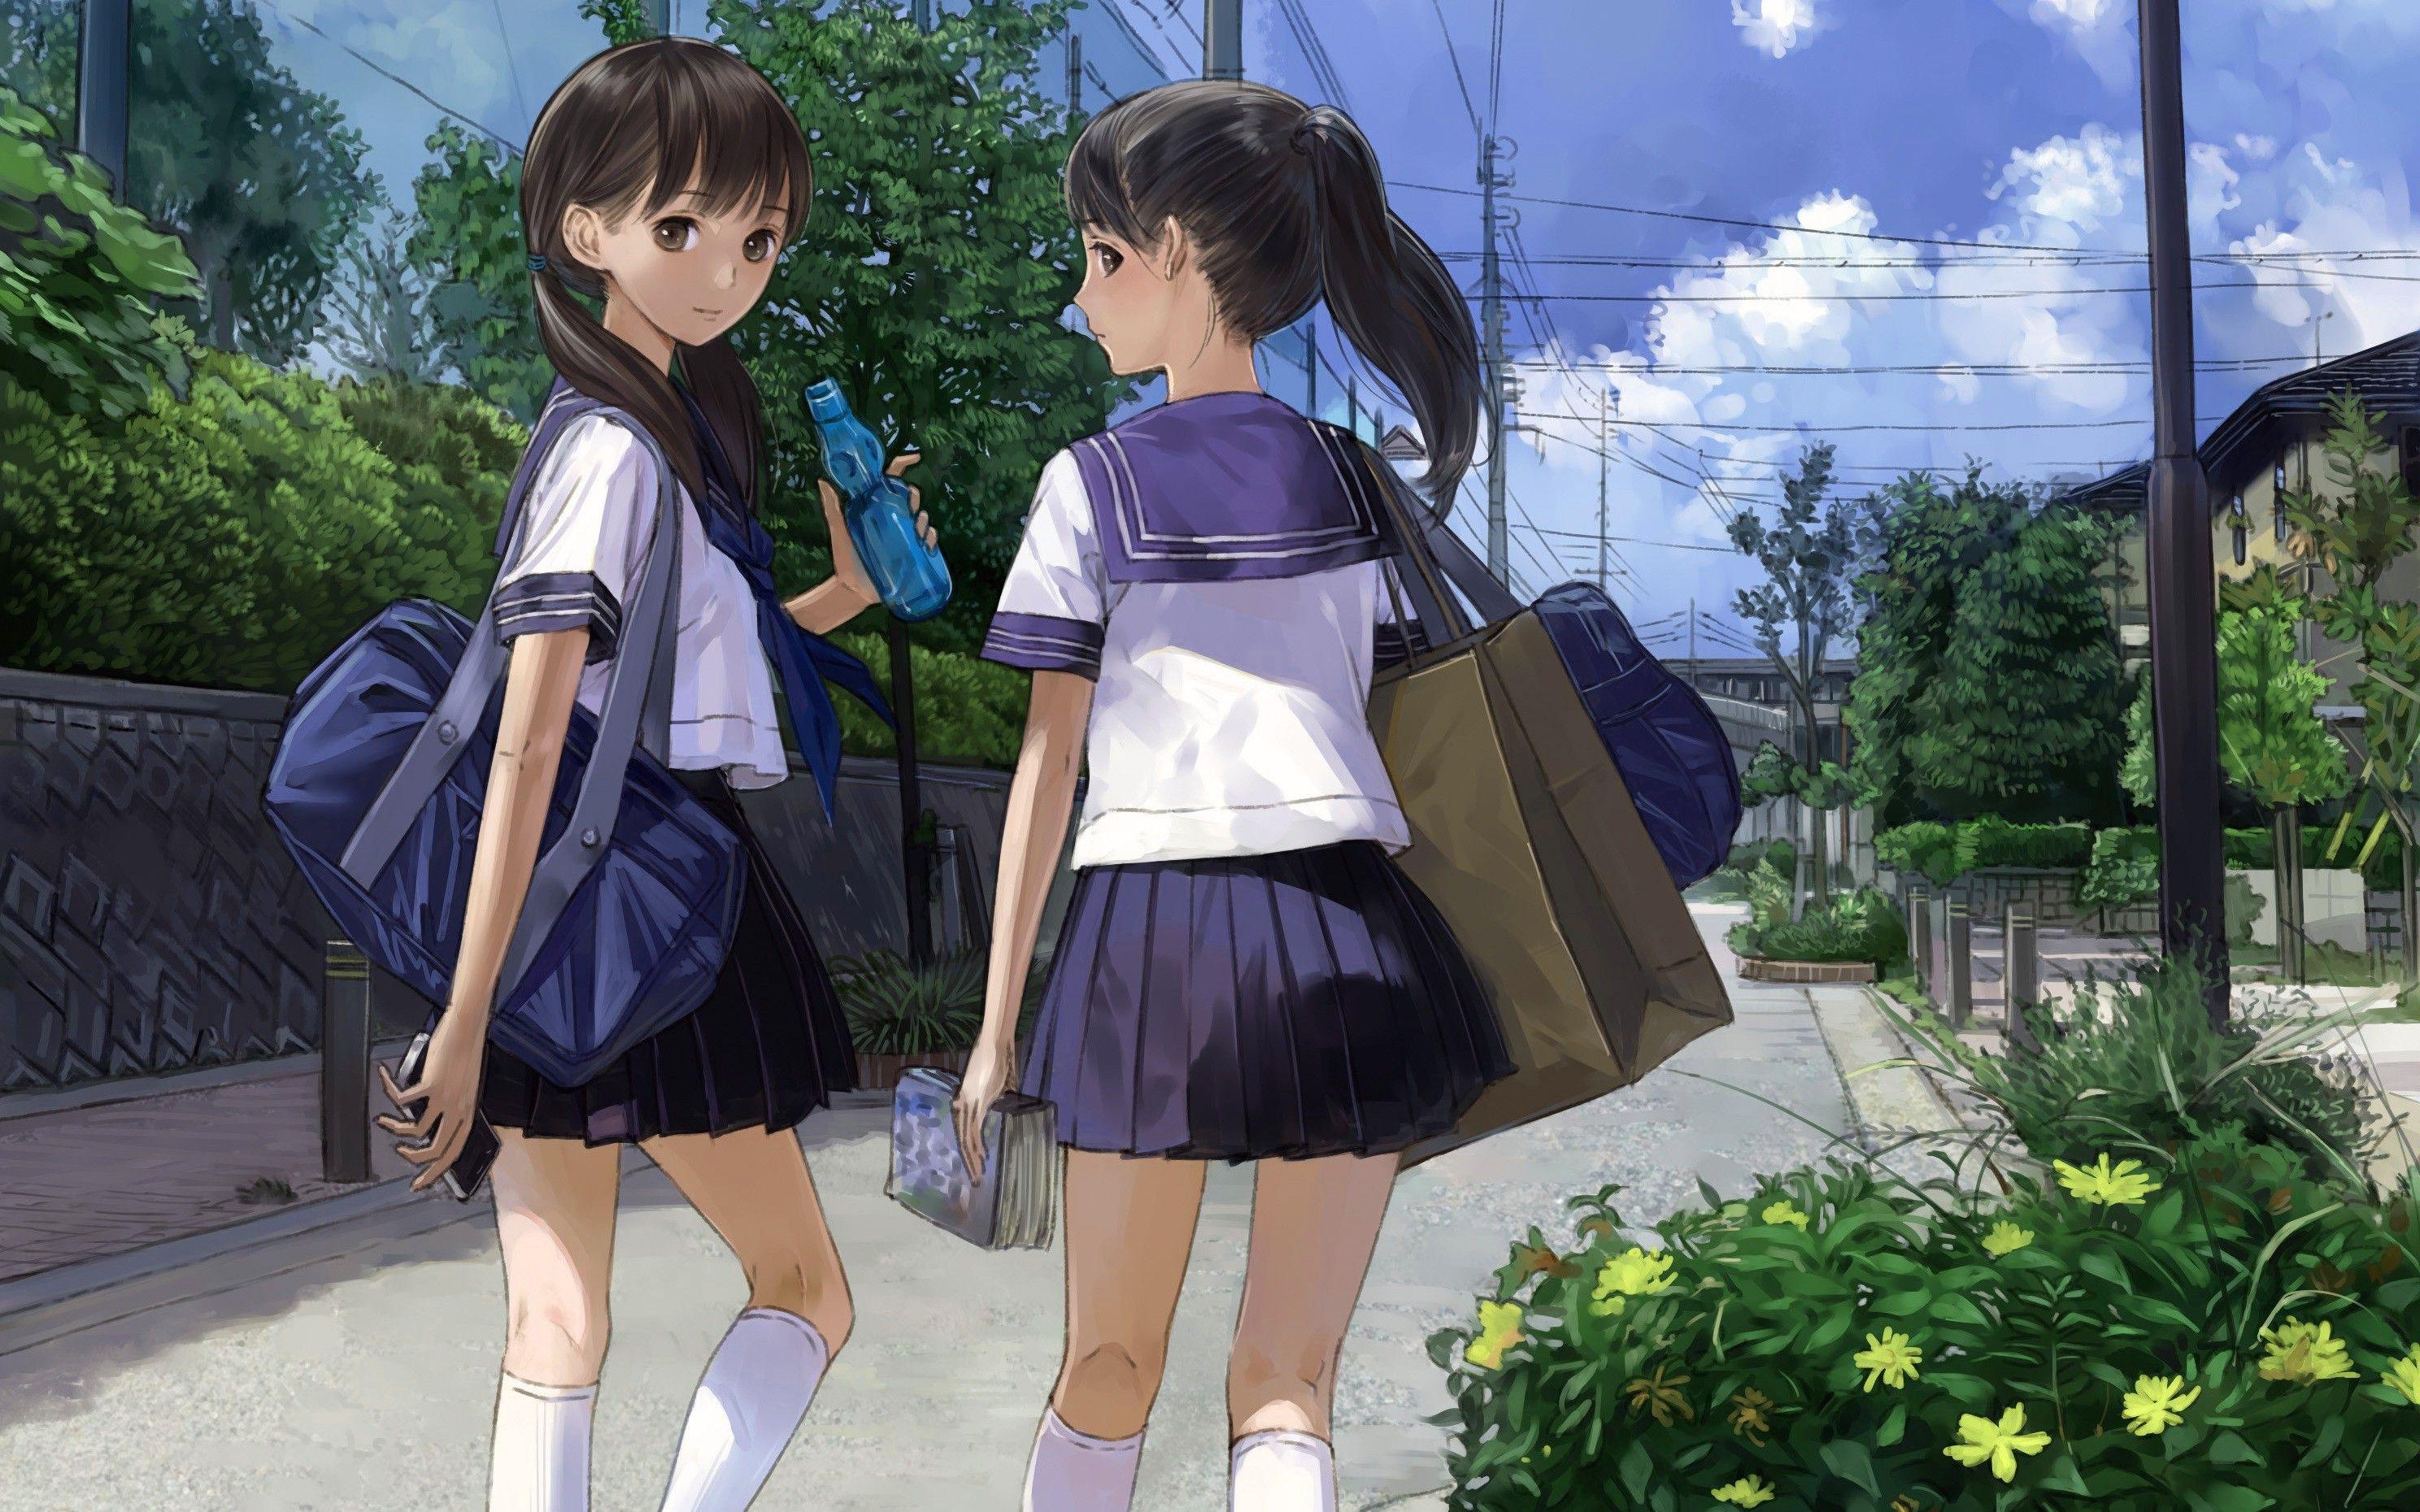 Anime Girl School Wallpaper HD